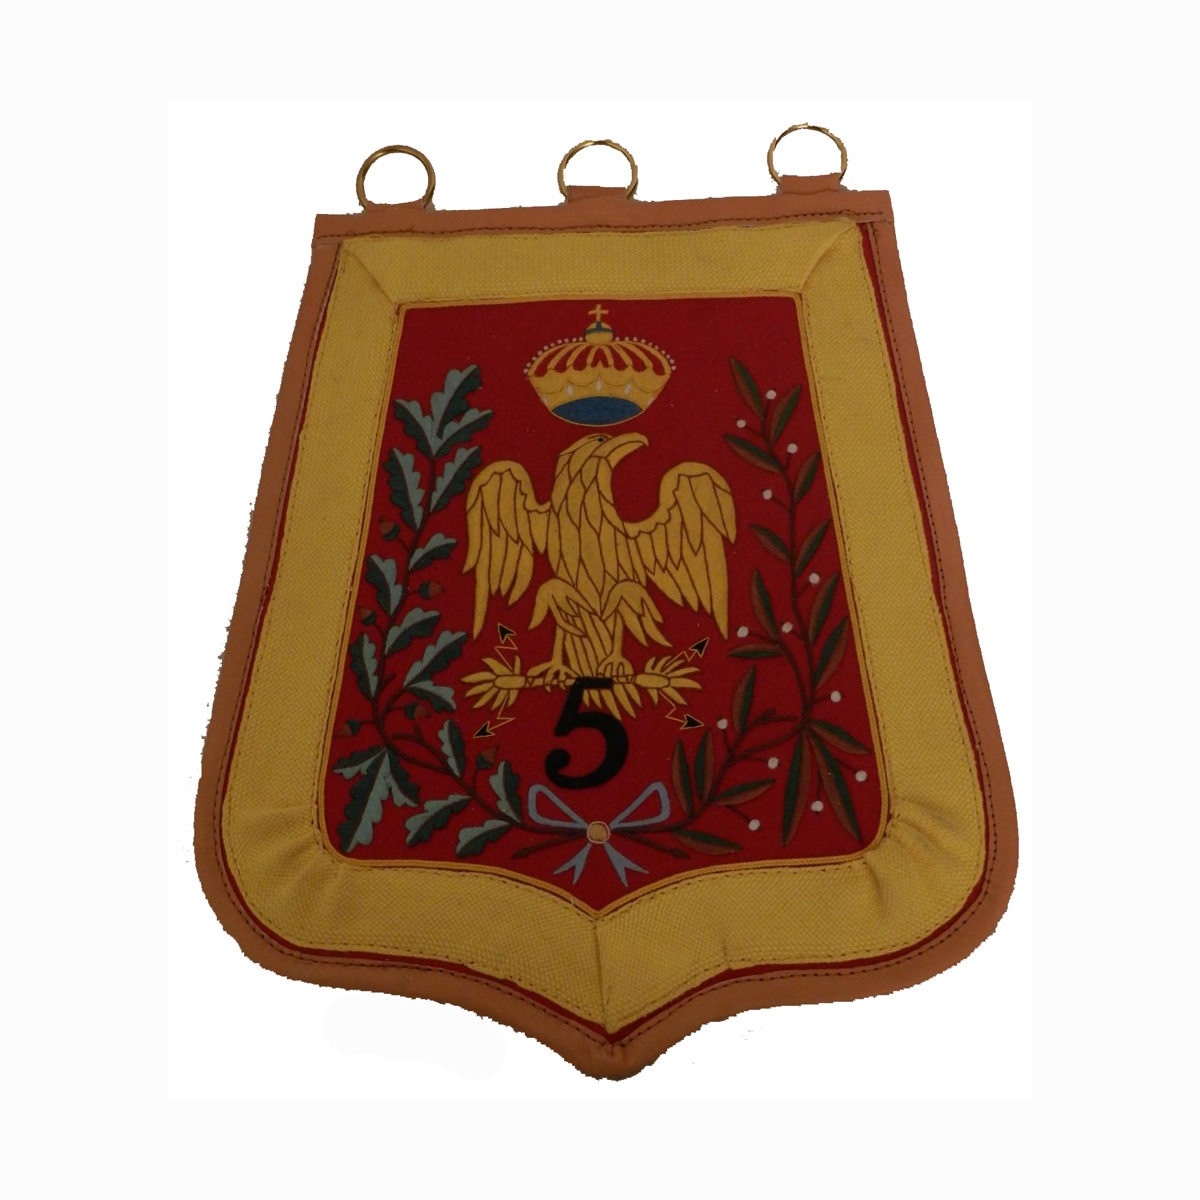 Sabretache 5th hussar, troop flag handmade very nice quality customized USA Hand Embroidery 